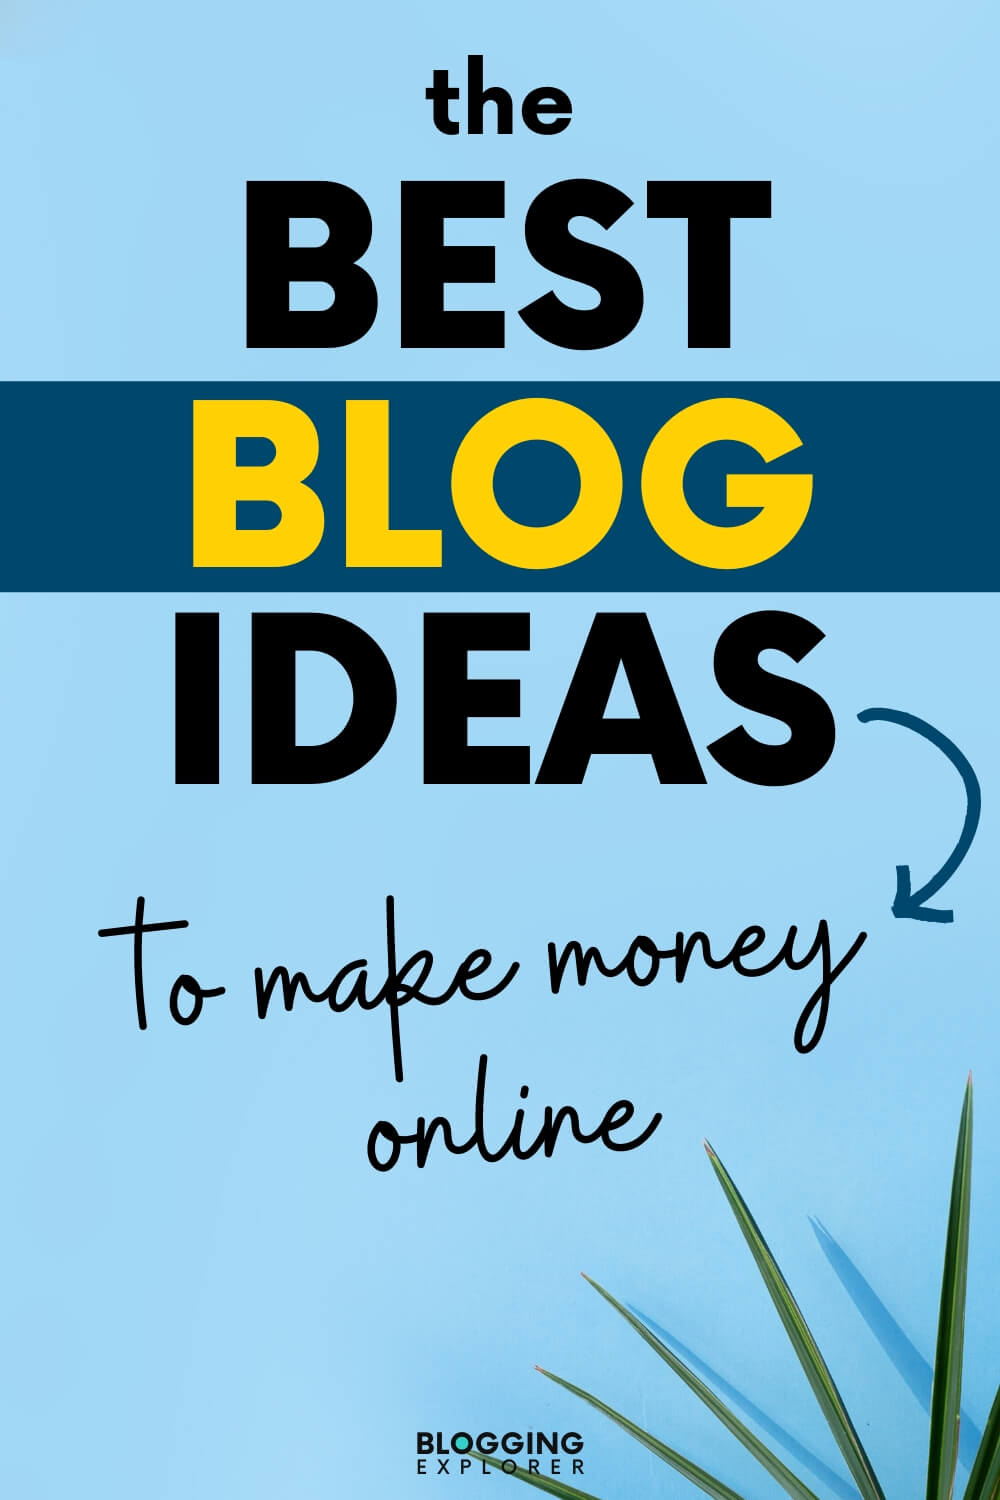 11 Popular Blog Ideas That Make Money in 2022